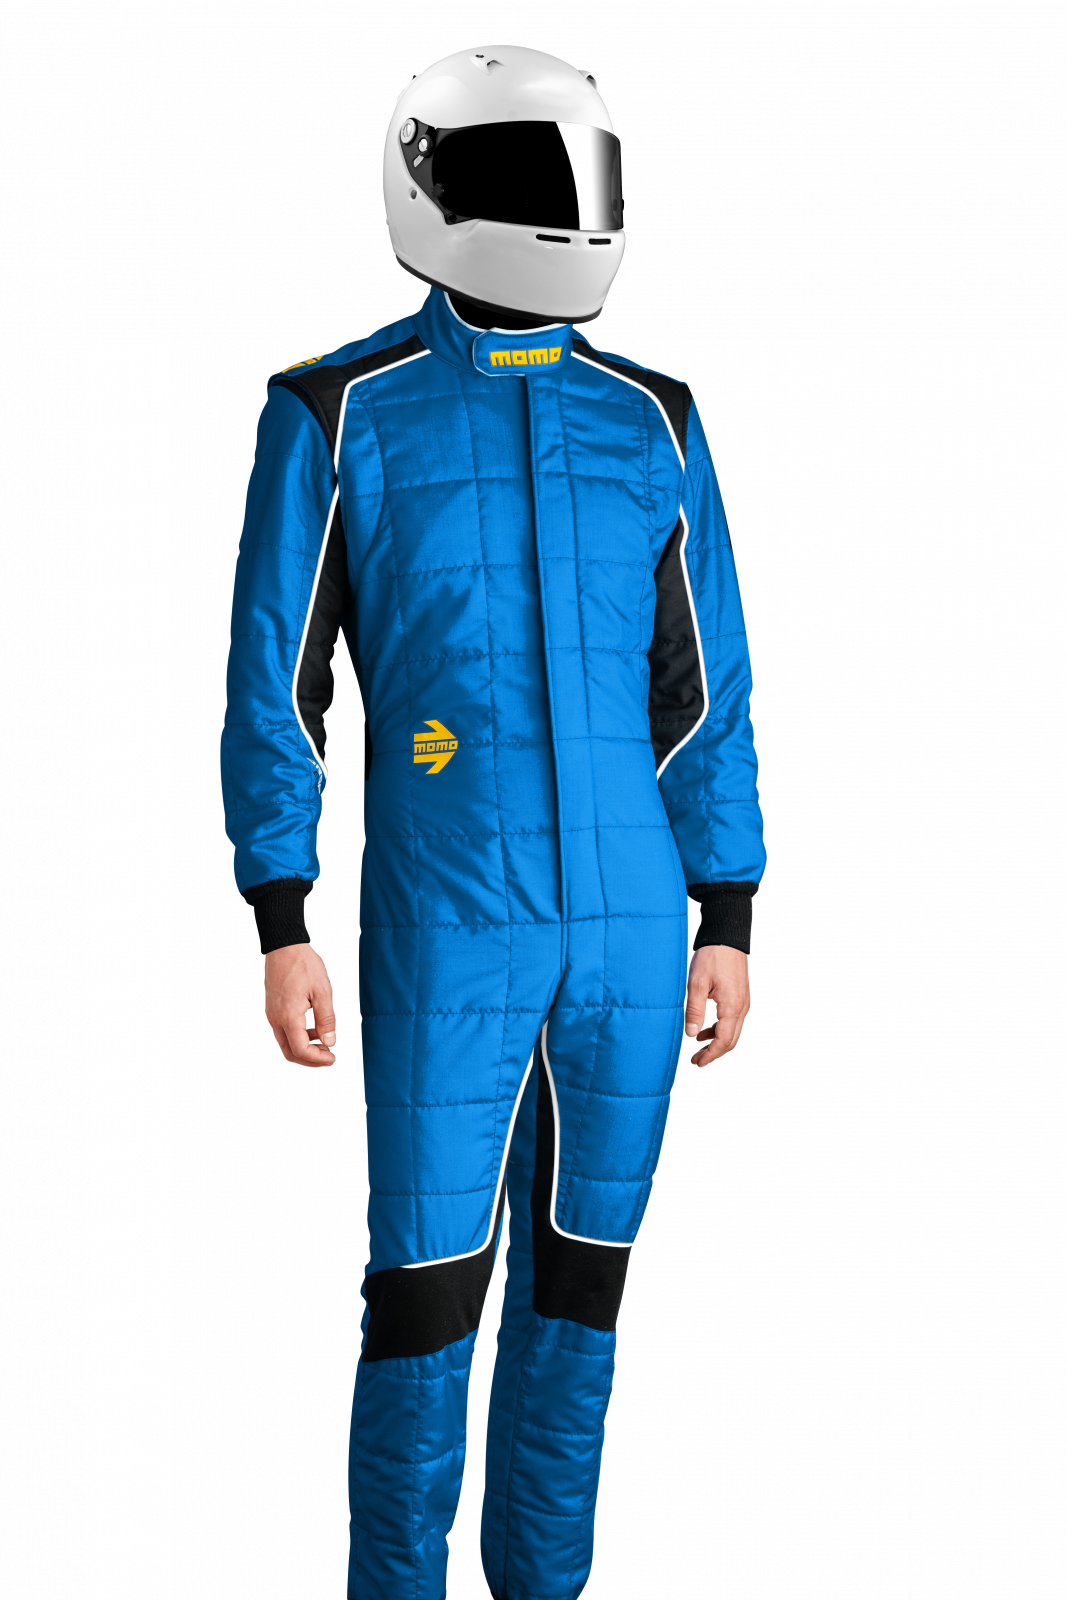 MOMO Corsa Evo Blue Size 56 Racing Suit TUCOEVOBLU56